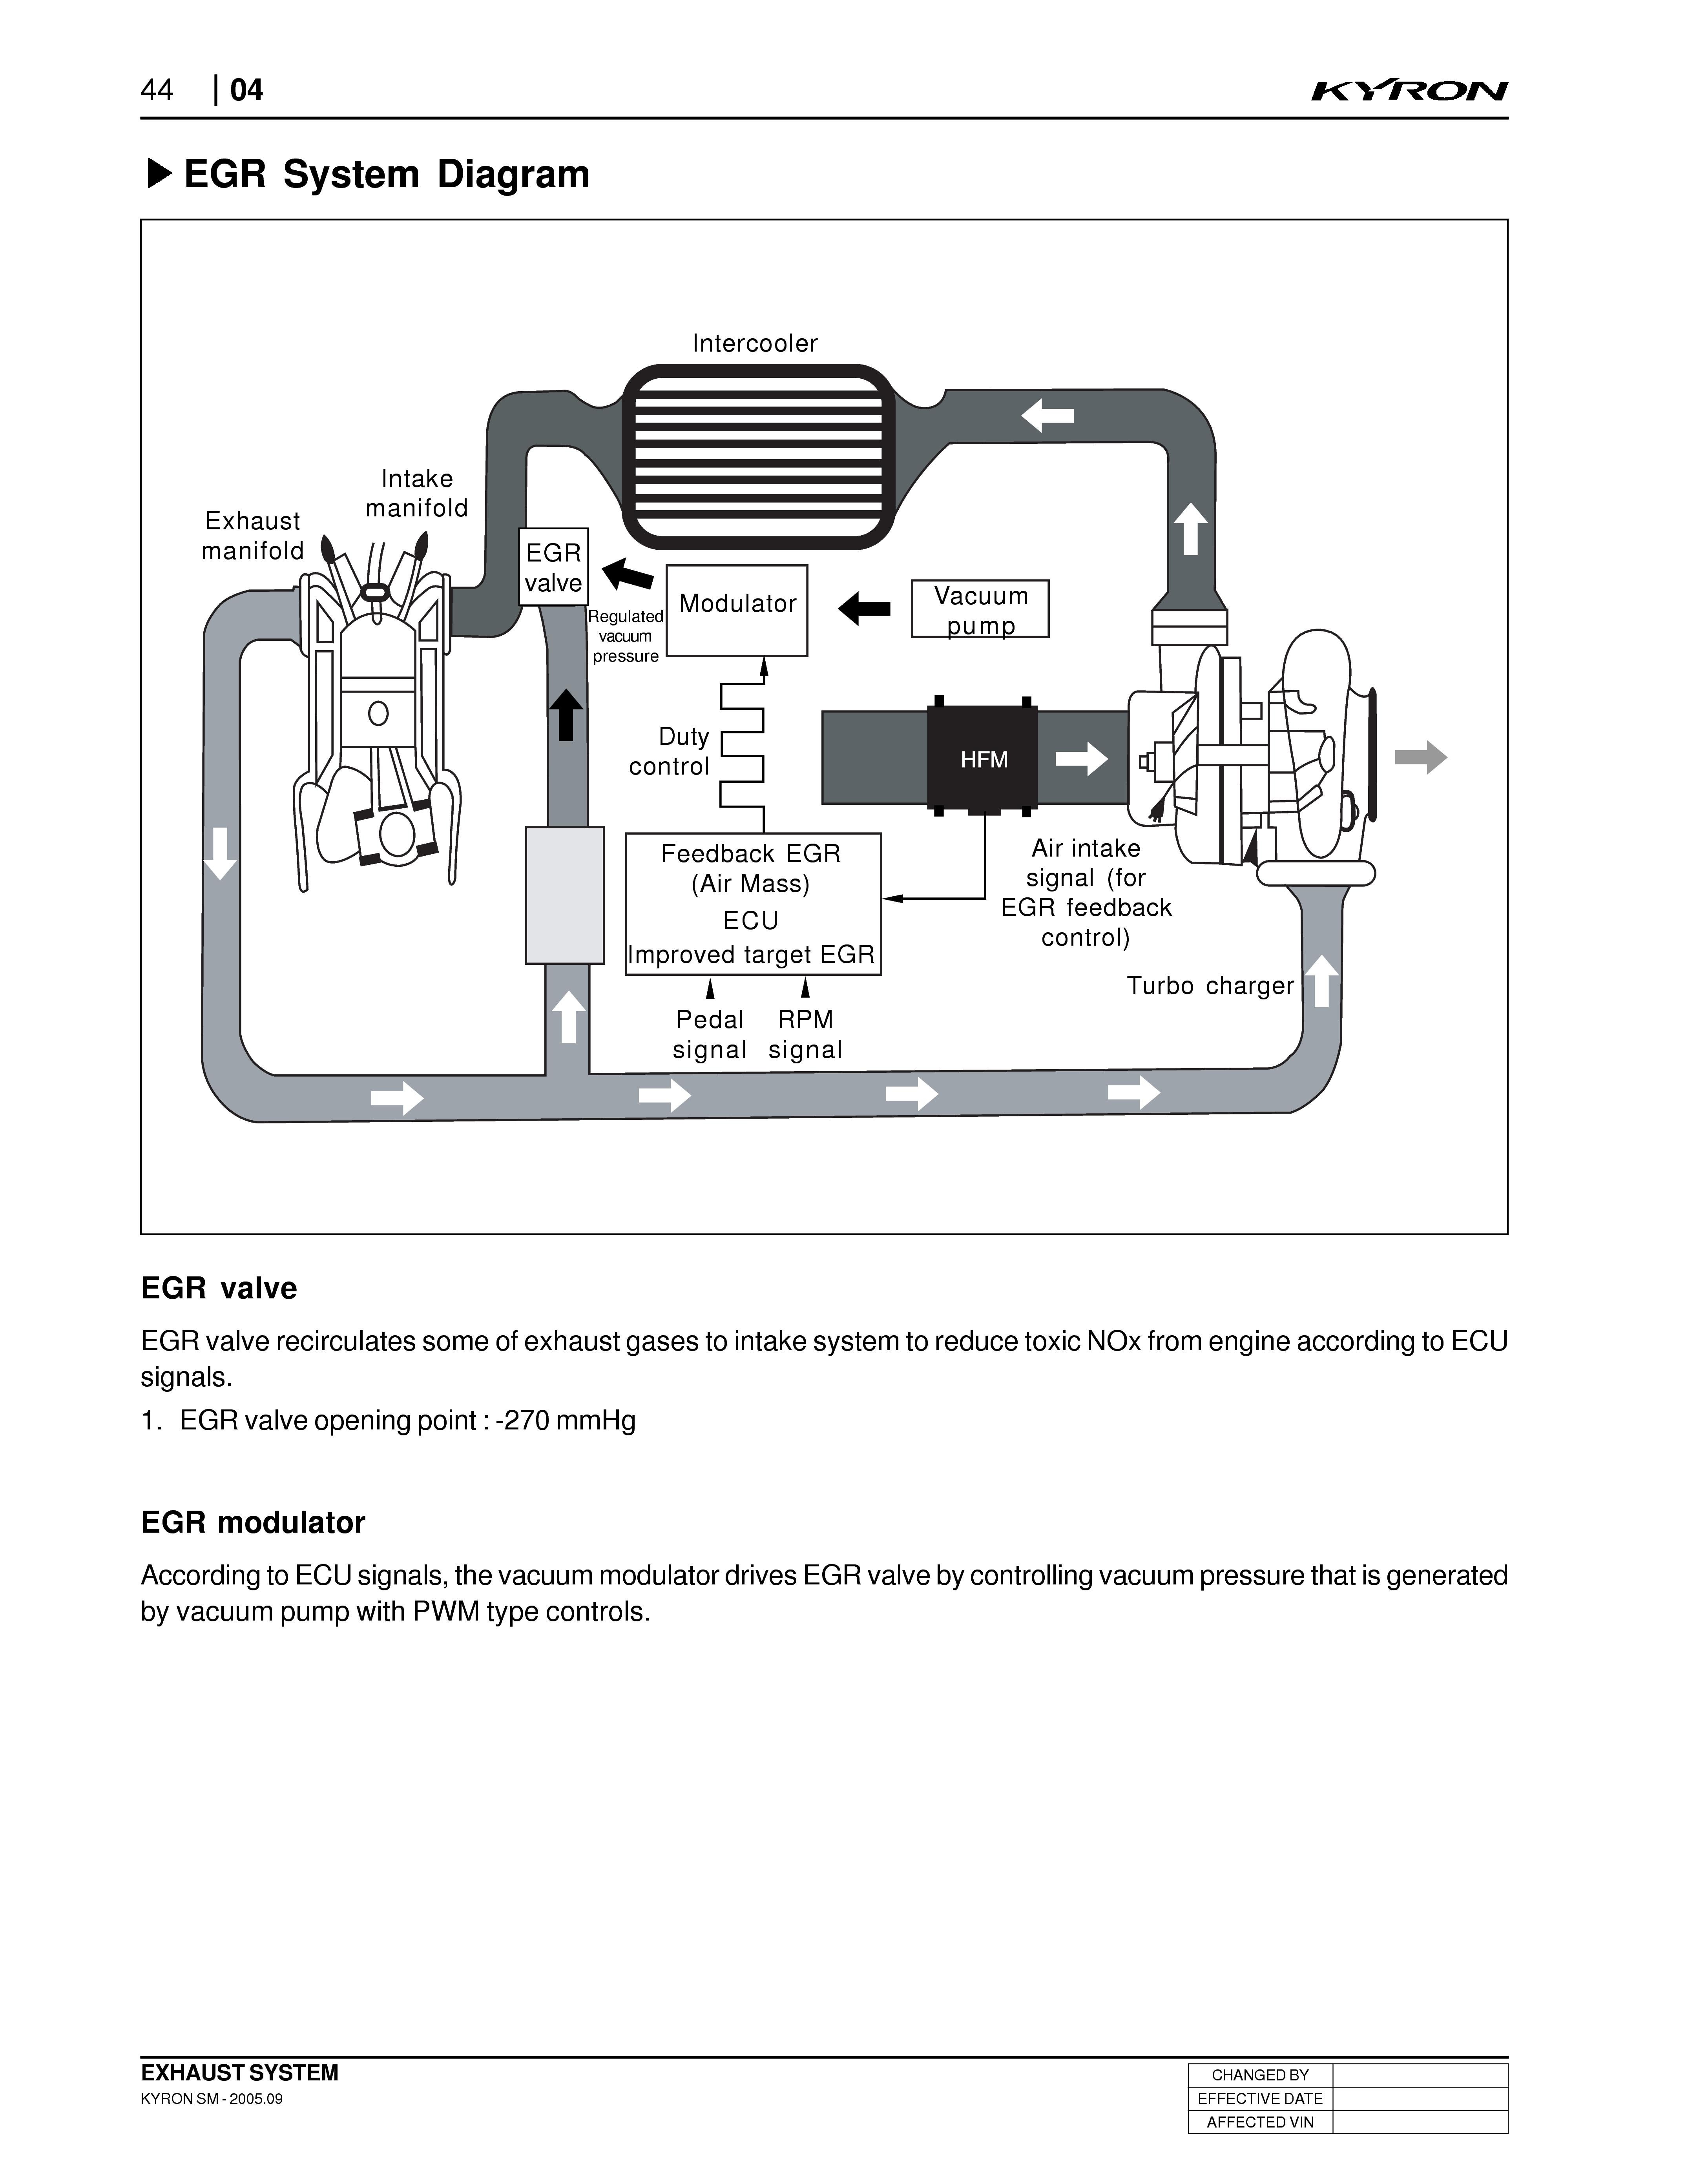 Turbo System Diagram Egr System Diagram Intercooler Intake Manifold Exhaust Manifold Egr Of Turbo System Diagram